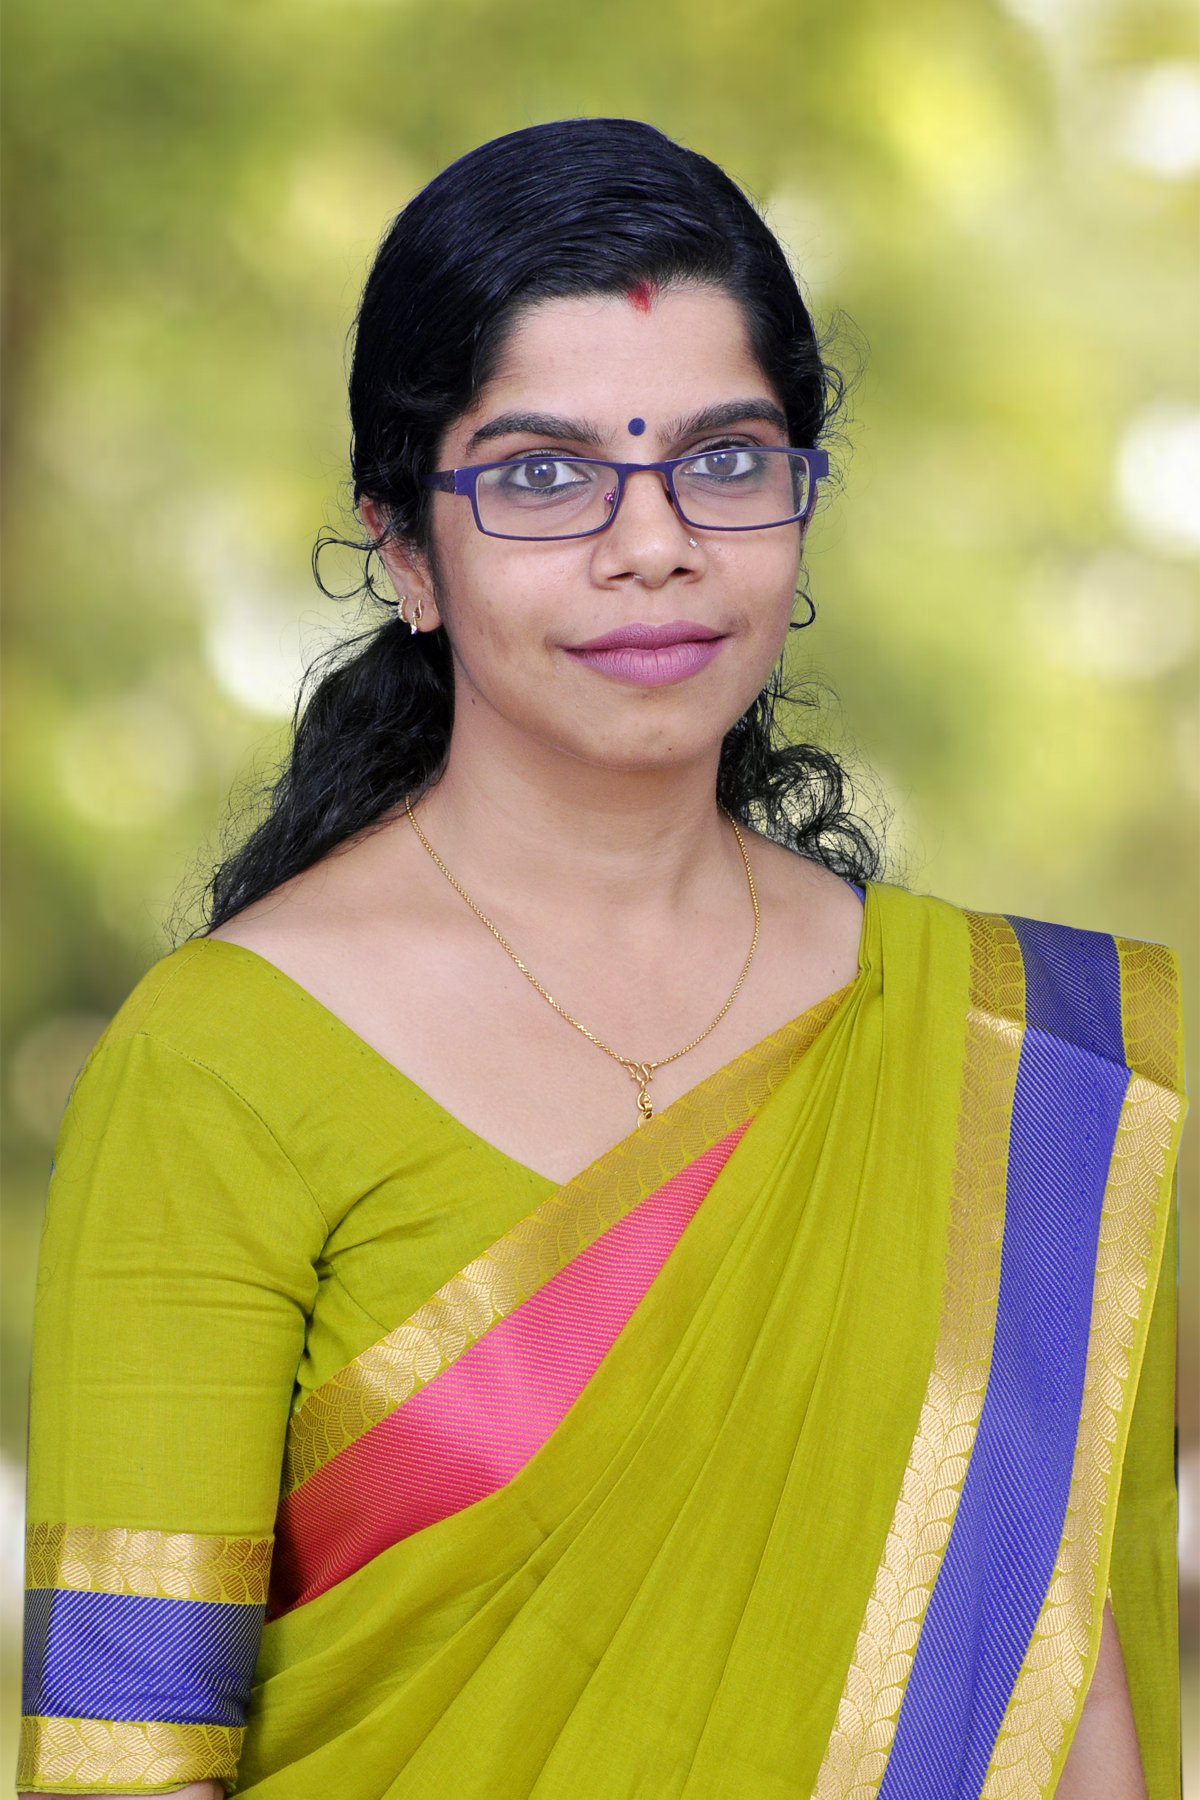 Ms. Roshini Vinod